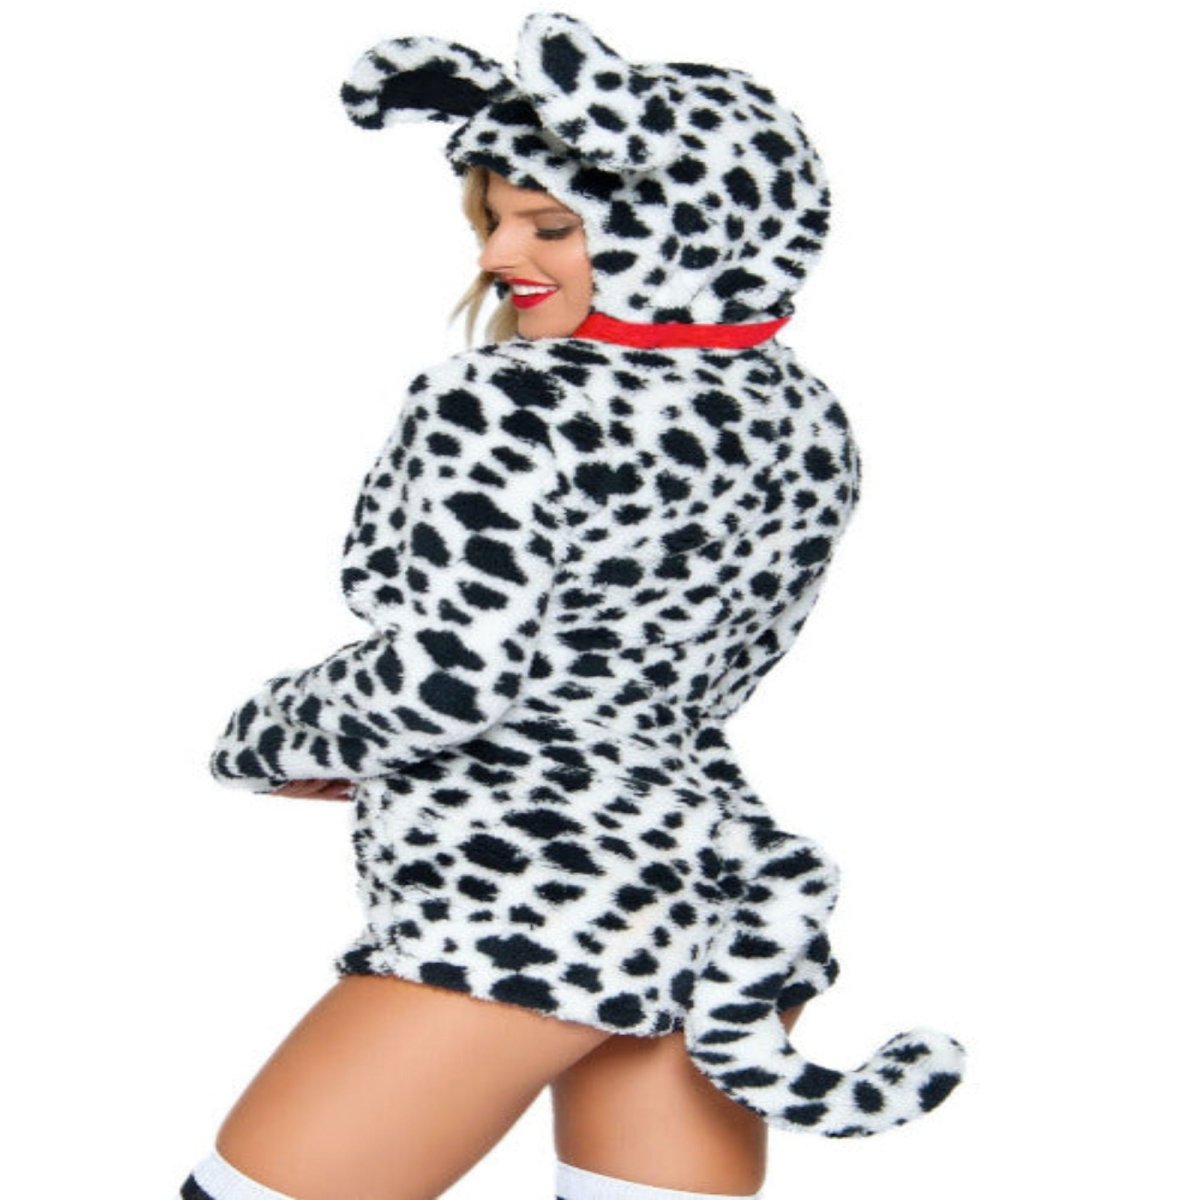 Darling Dalmatian Costume - worldclasscostumes